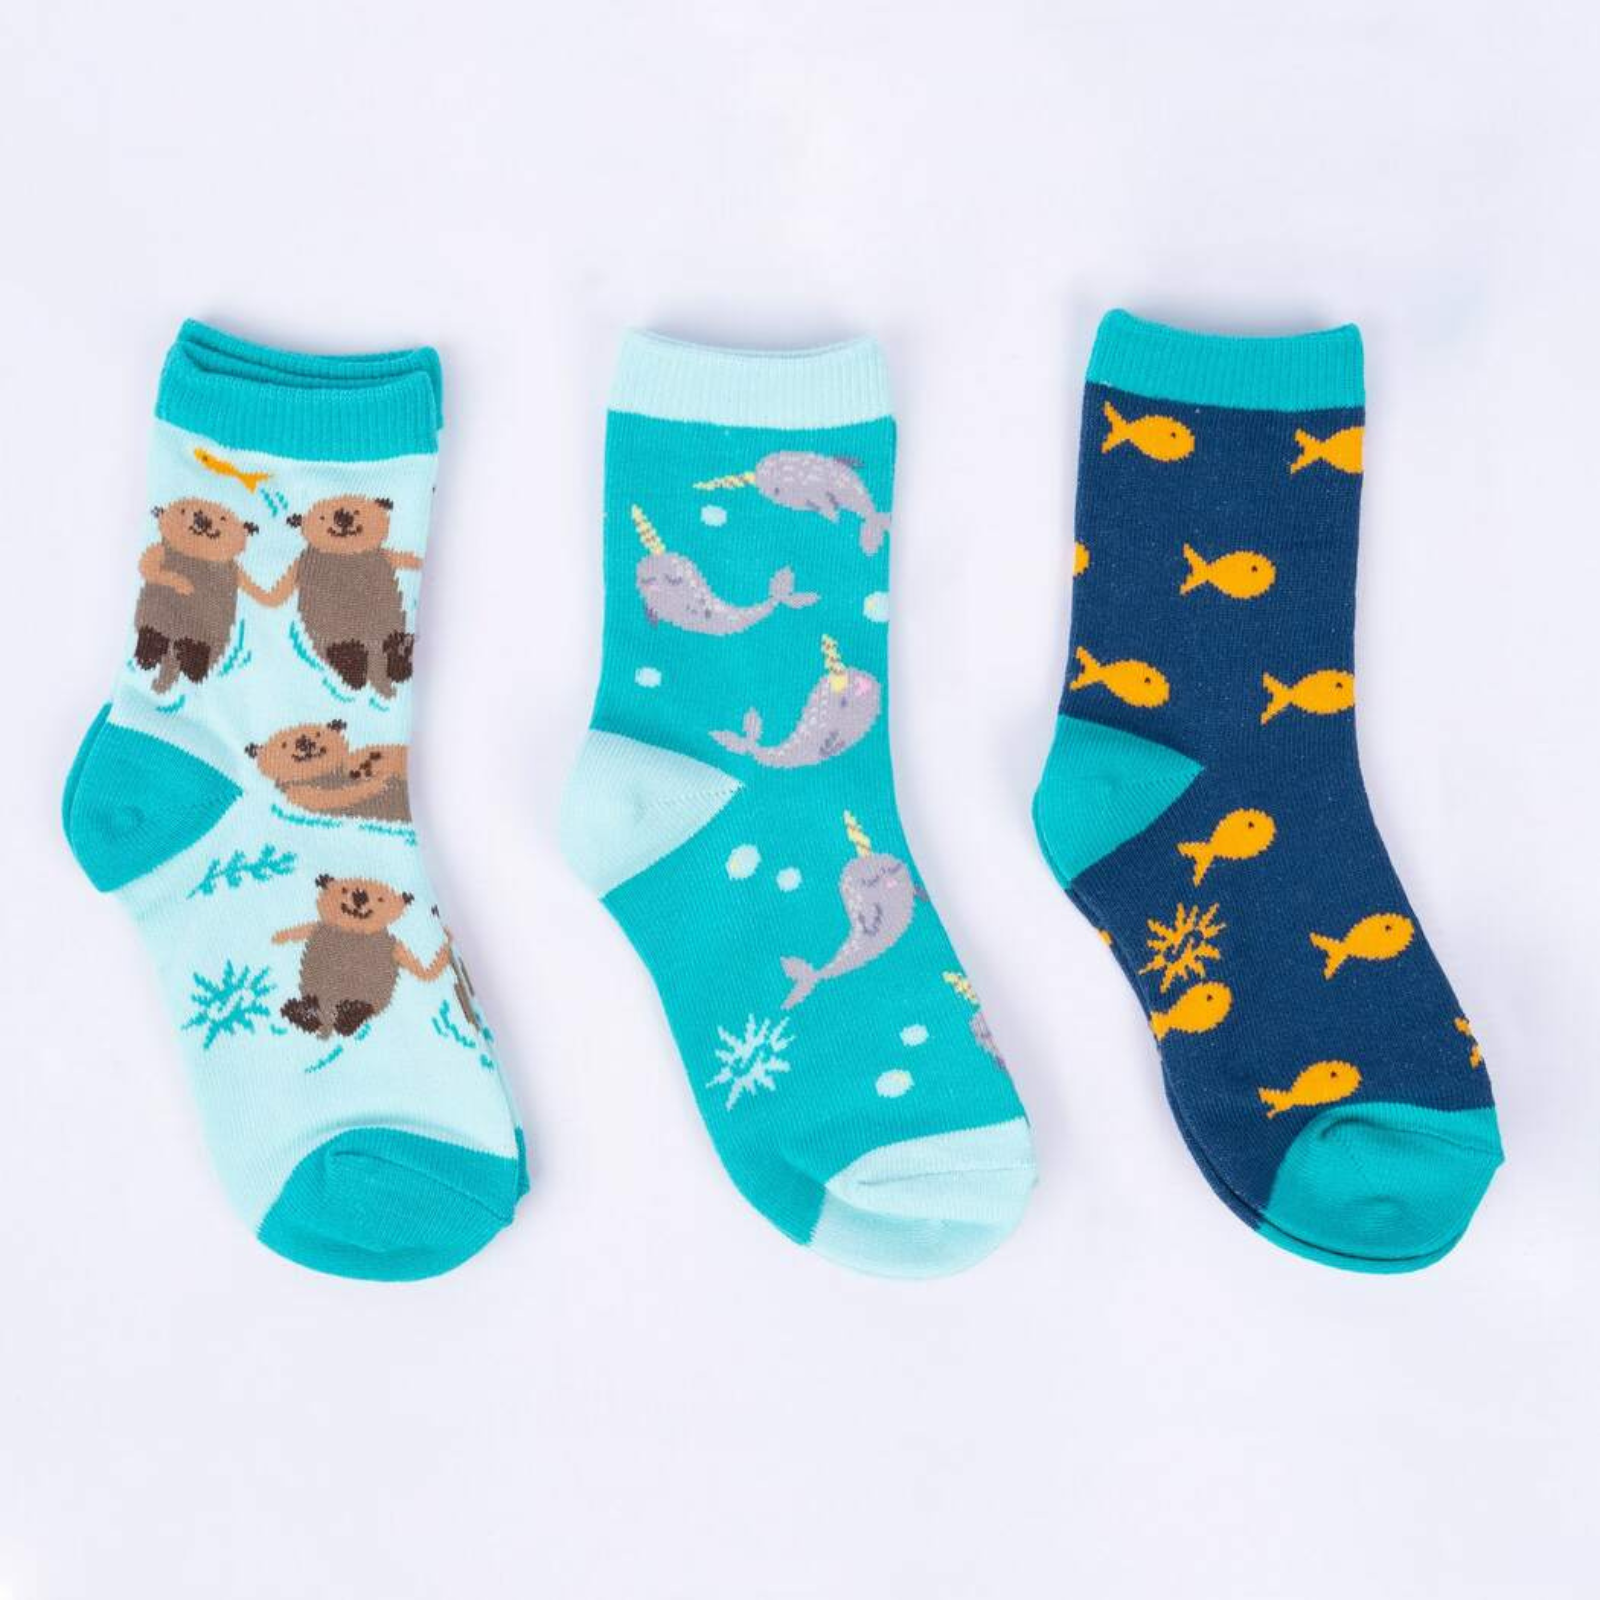 Sock It To Me My Otter Half 3-pack kids' socks on display